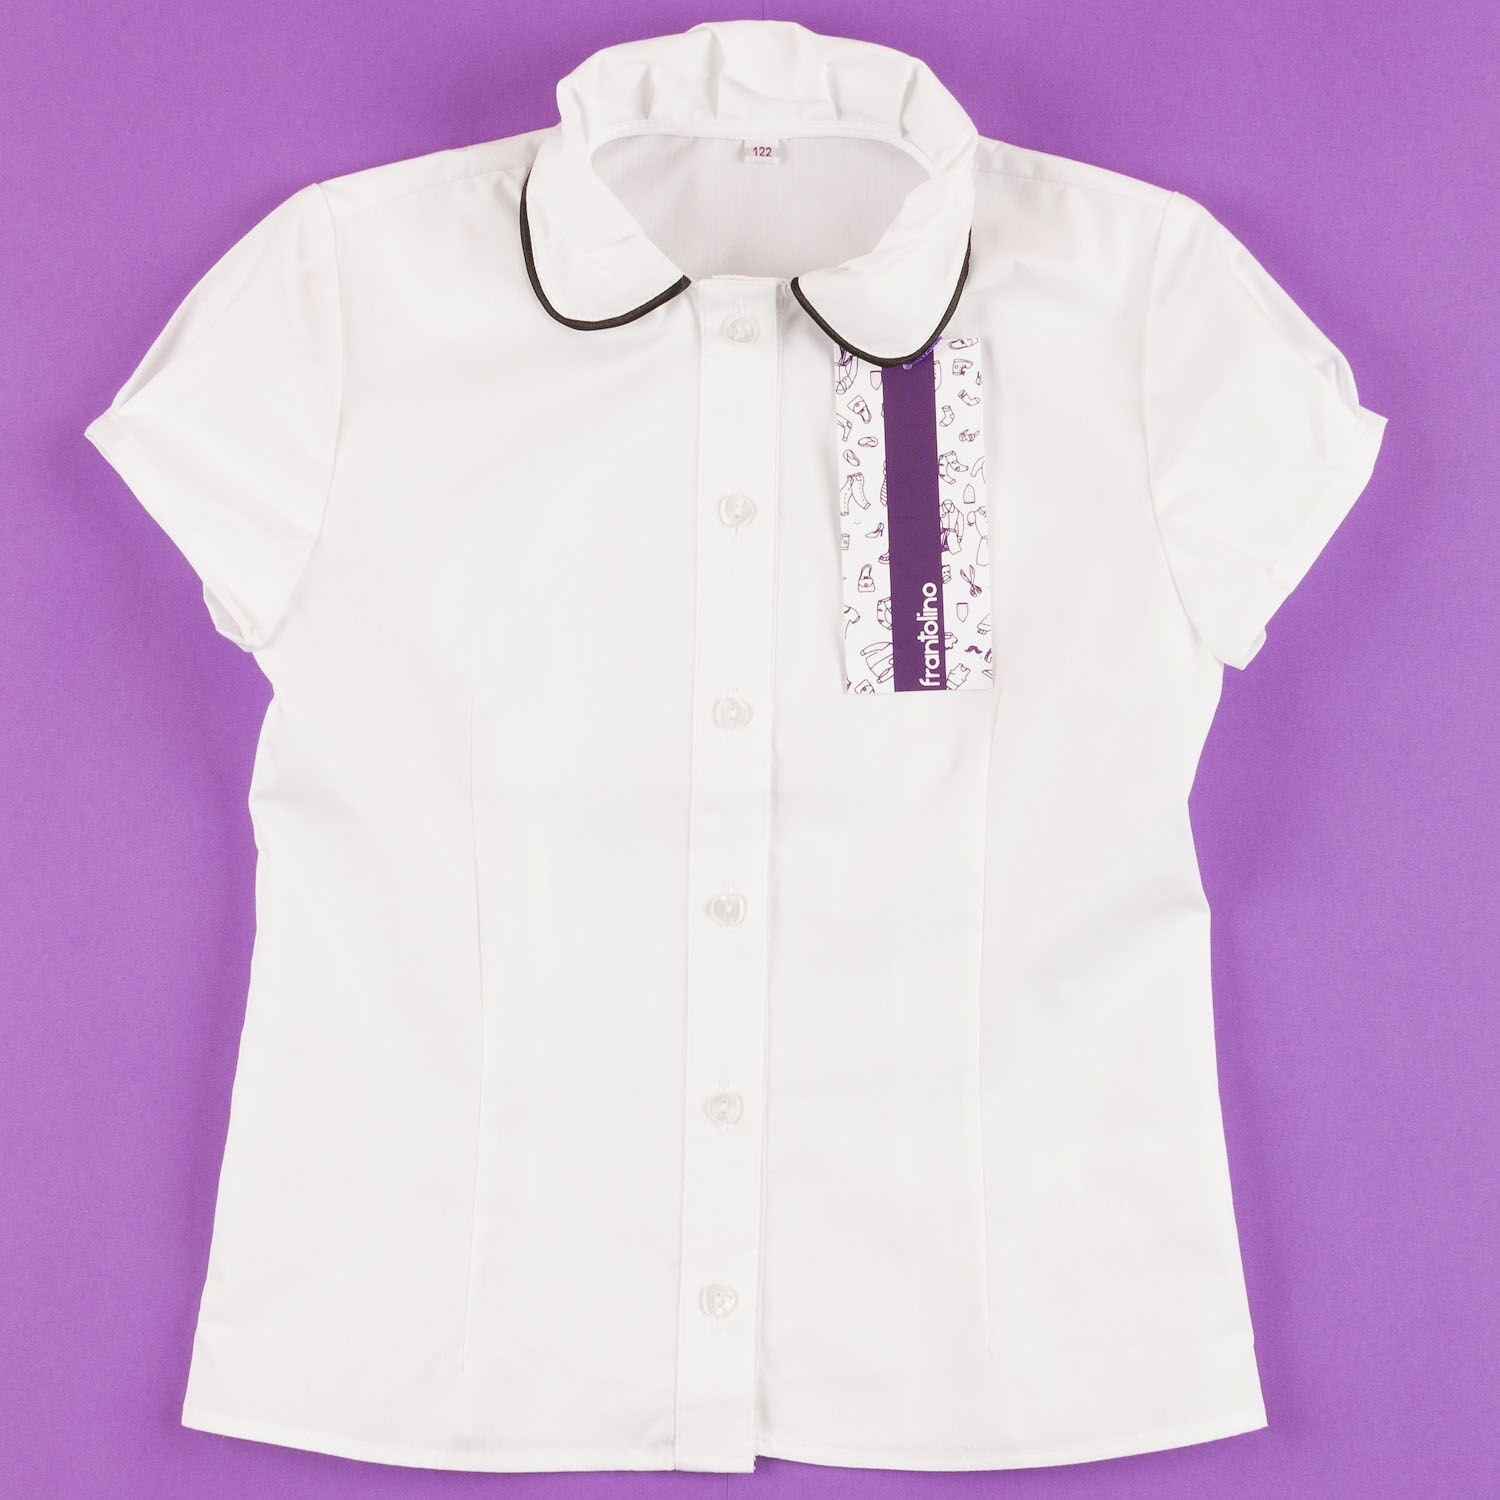 Блузка с коротким рукавом Frantolino белая 1221-001 - цена